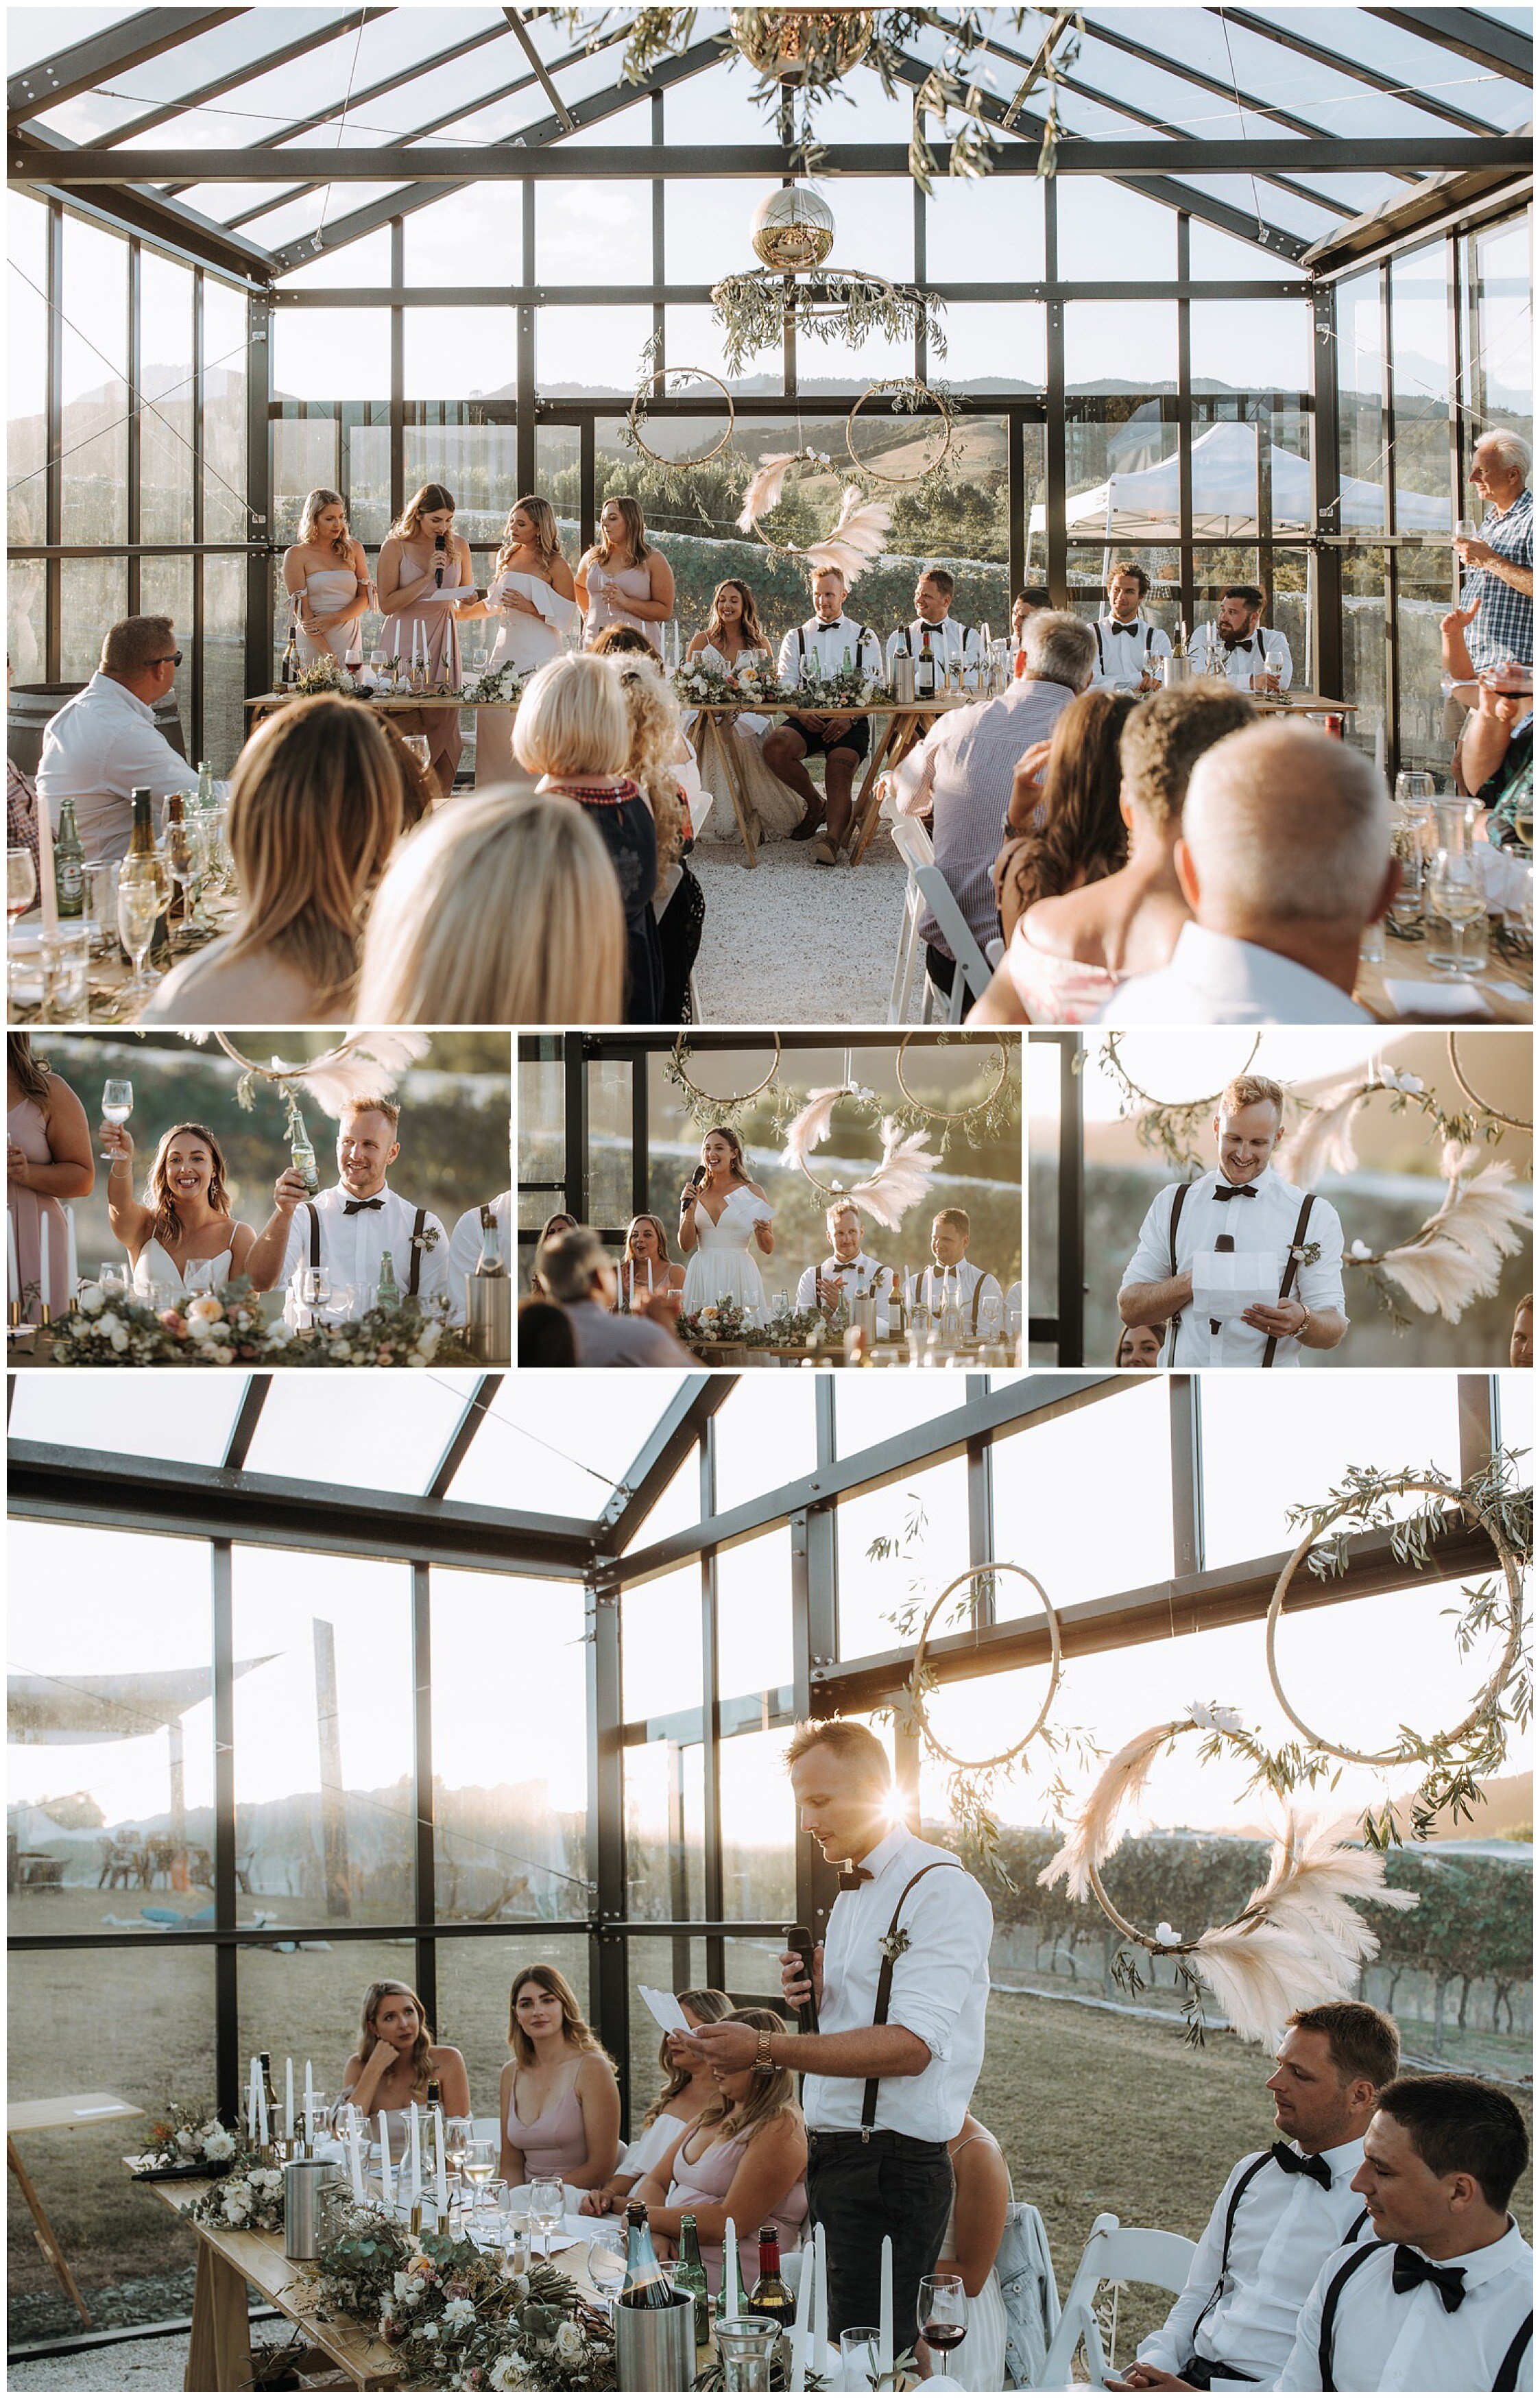 Zanda+Auckland+wedding+photographer+boho+retro+suspenders+groom+denim+jacket+bride+Te+Whai+Bay+Wines+venue+bright+glass+house+vineyard+photoshoot+New+Zealand_36.jpeg